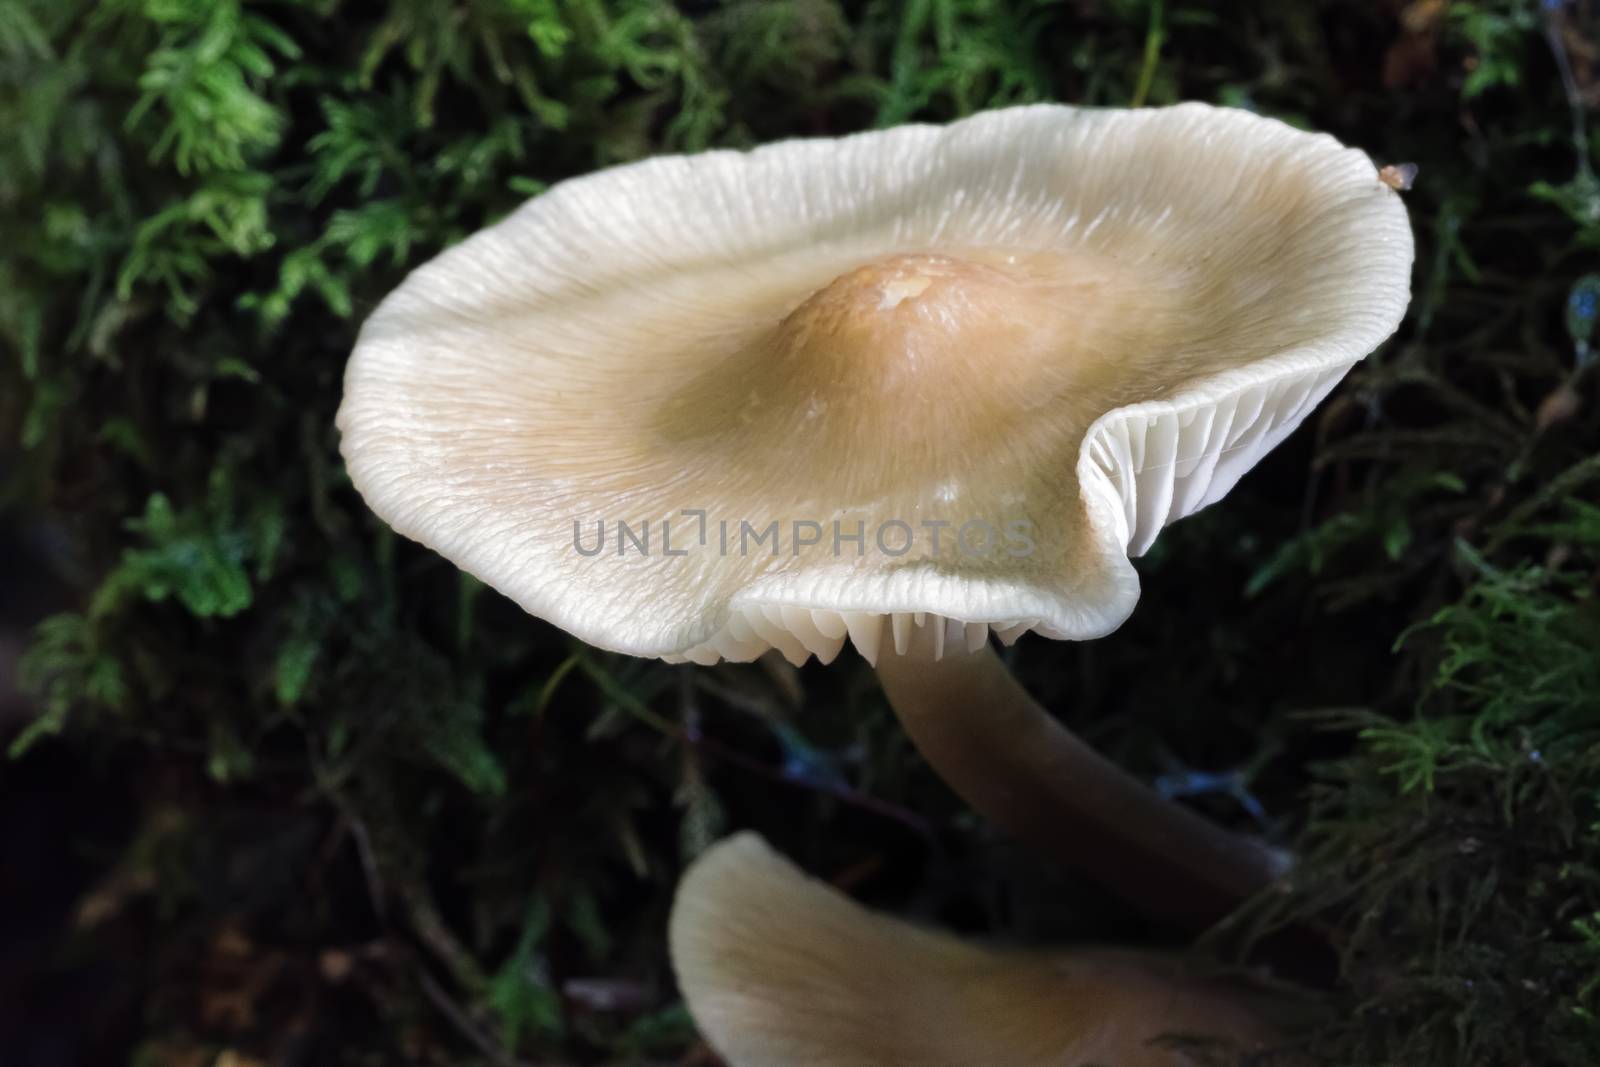 Bonnet Mycena Fungus (Mycena galericulata) by phil_bird